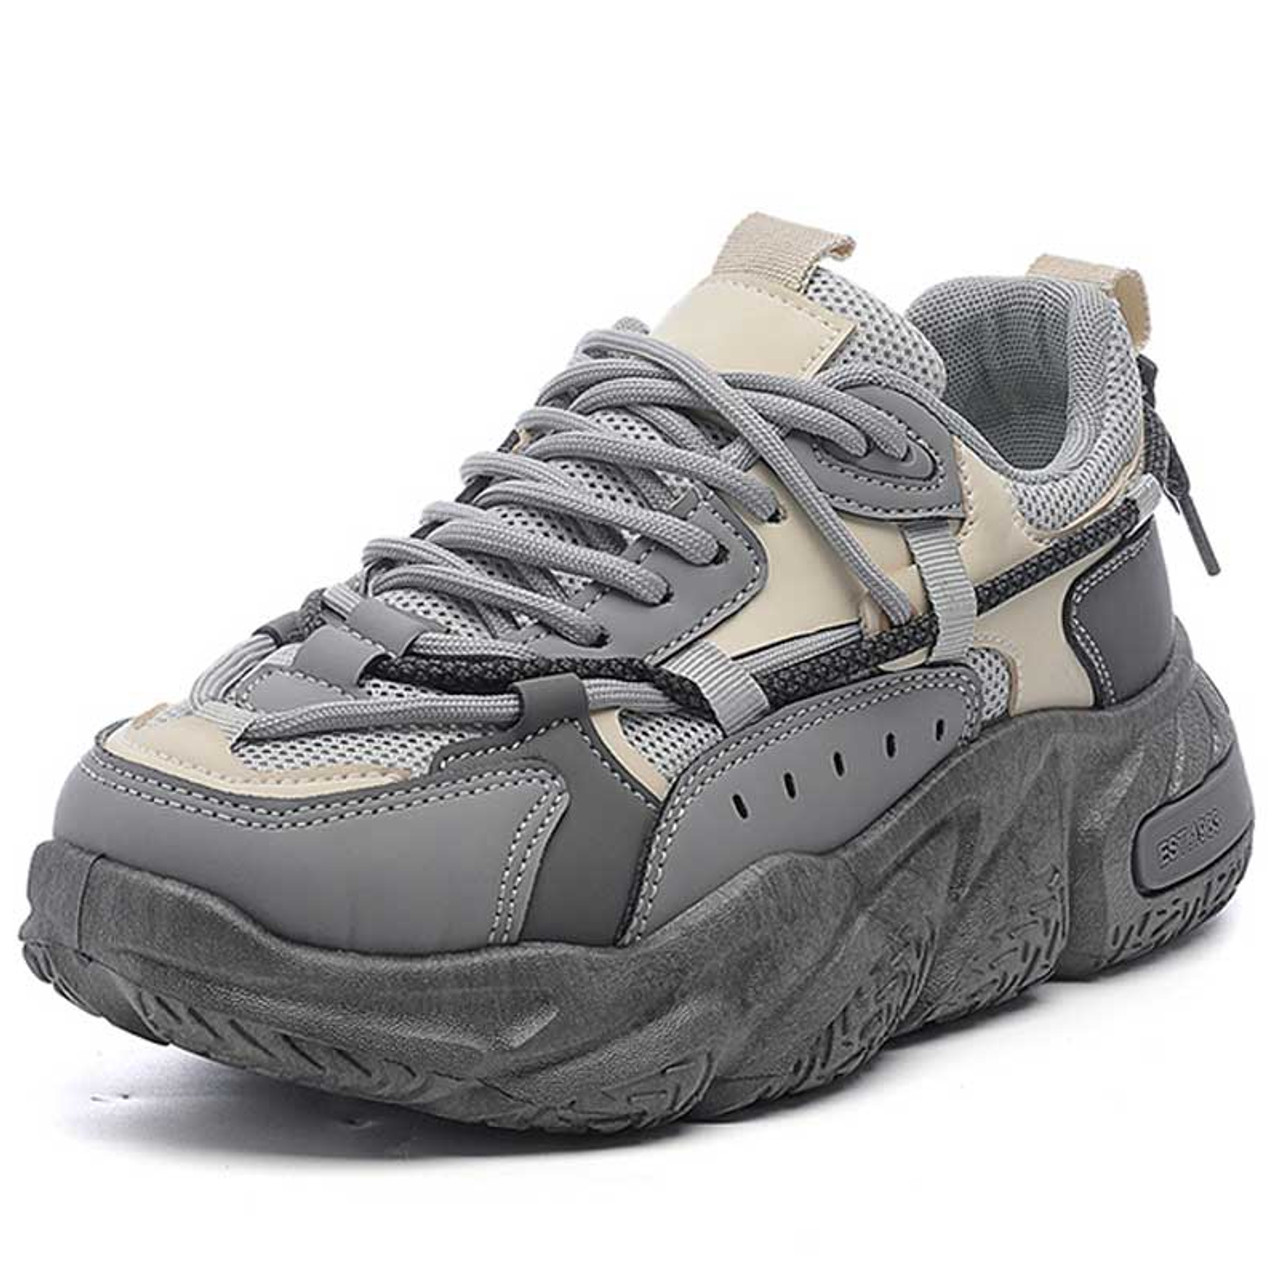 Buy AMP Grey Men Lace-Up Sneaker Shoes Shoes Online at Regal Shoes |7766414